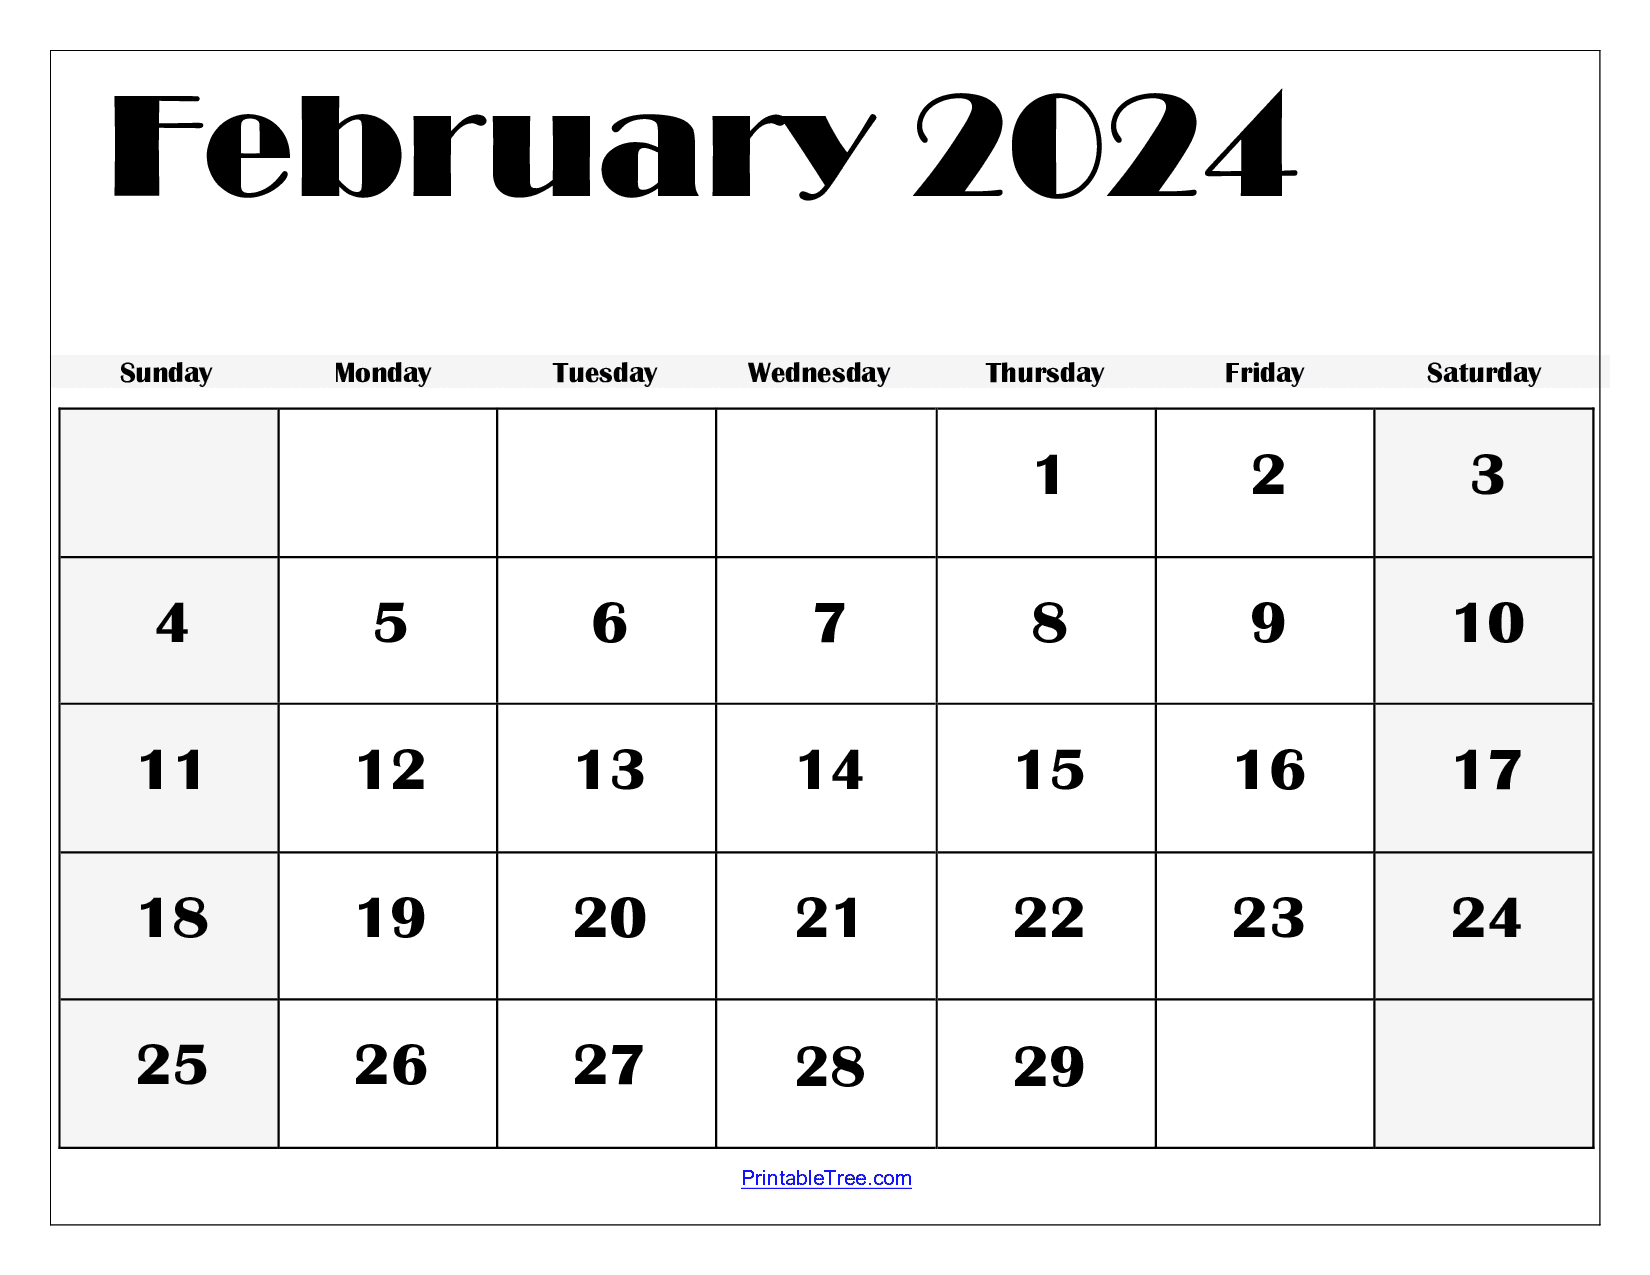 February 2024 Calendar Printable Pdf Template With Holidays for Calendar 2024 Feb Printable